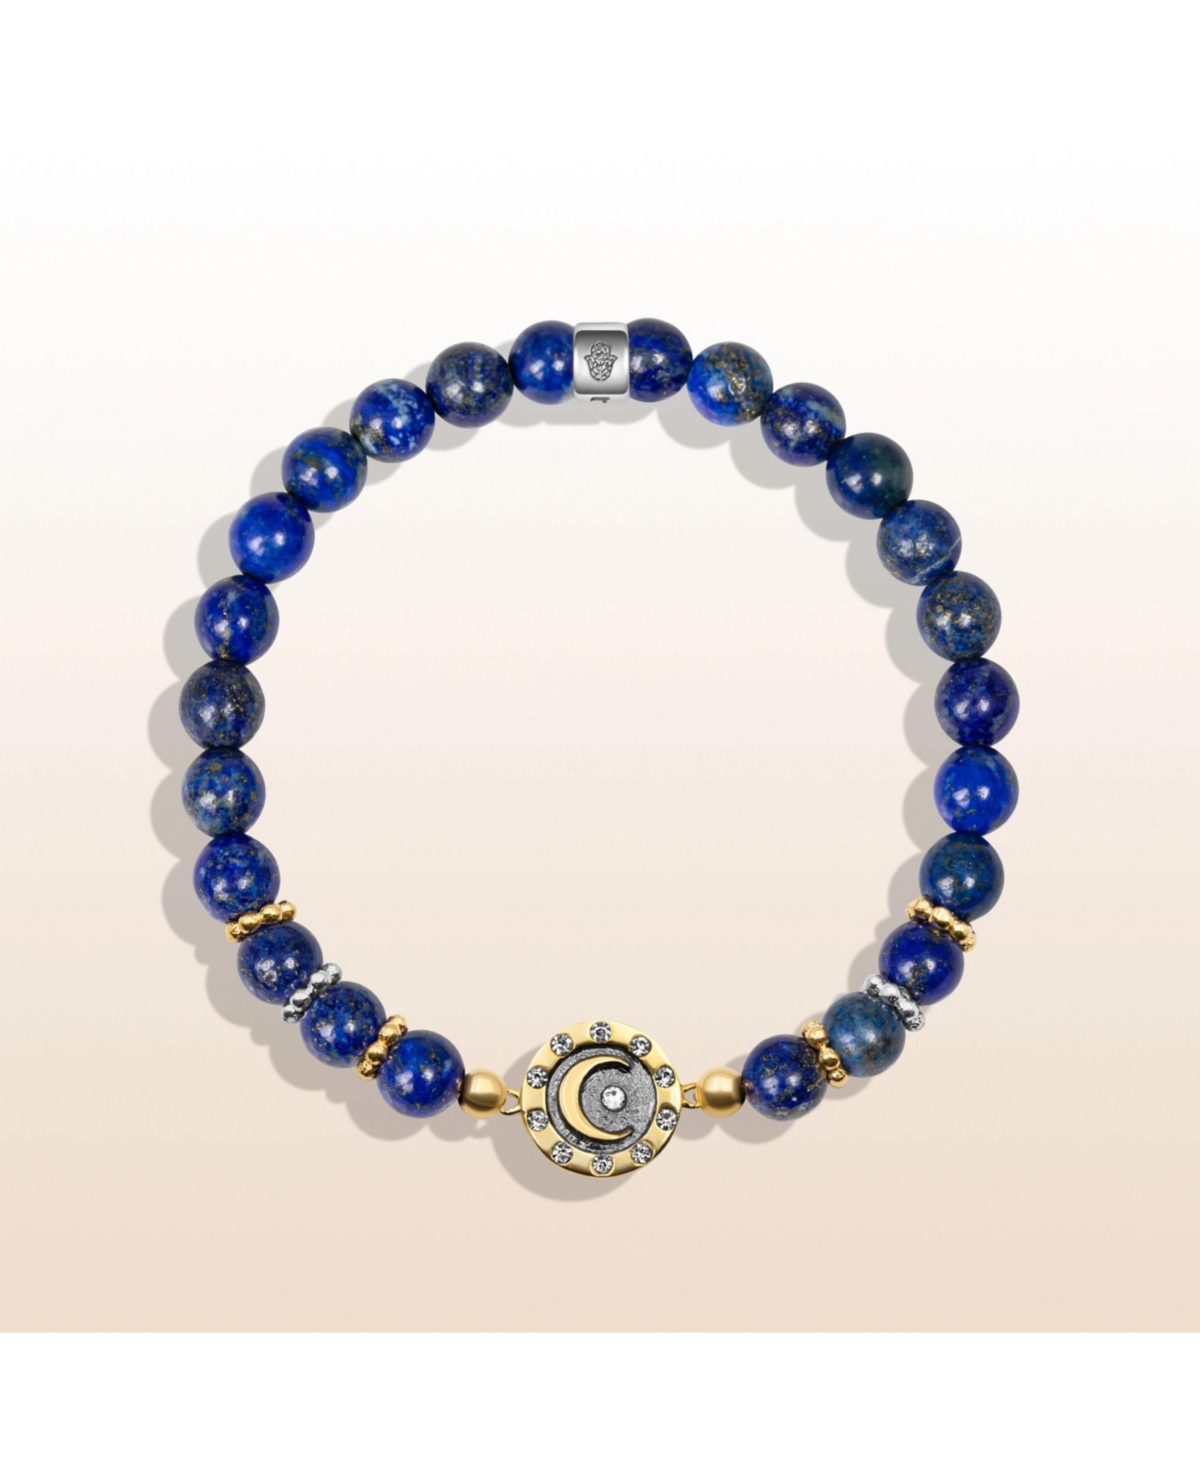 Illuminating Energy - Lapis Moon Charm Bracelet - Blue/gold/silver